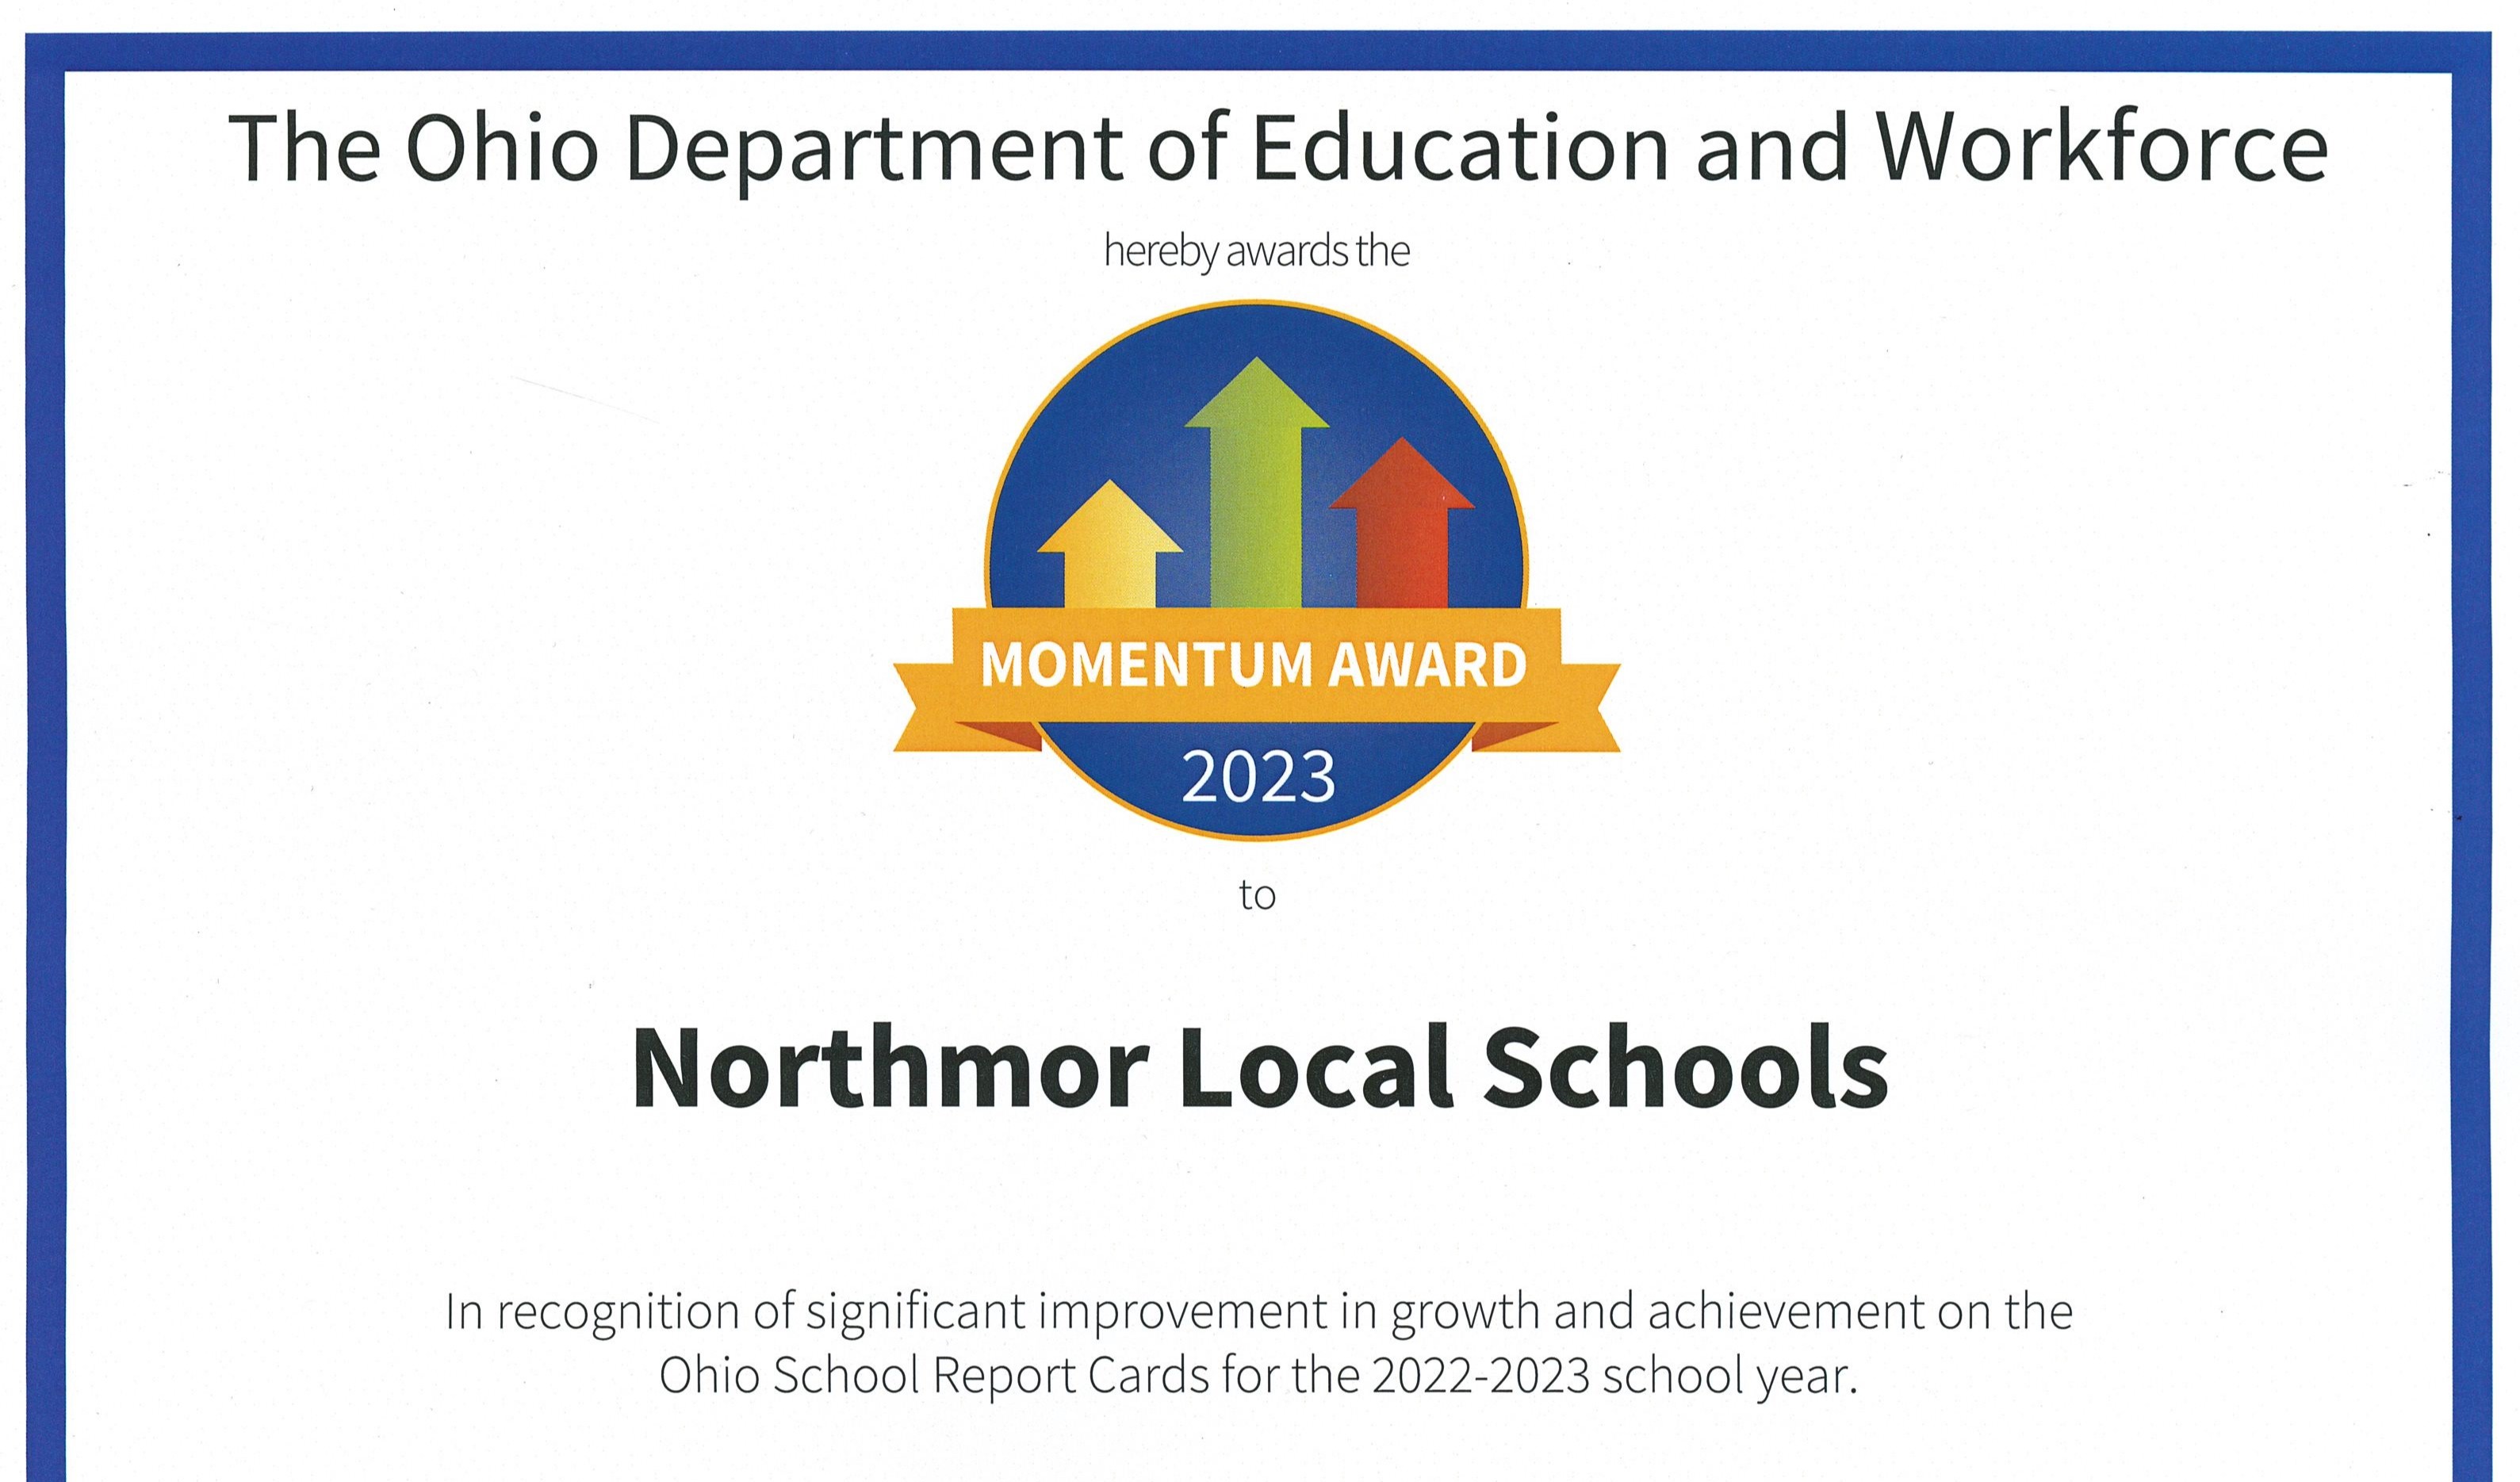 Ohio department of education and workforce momentum award image